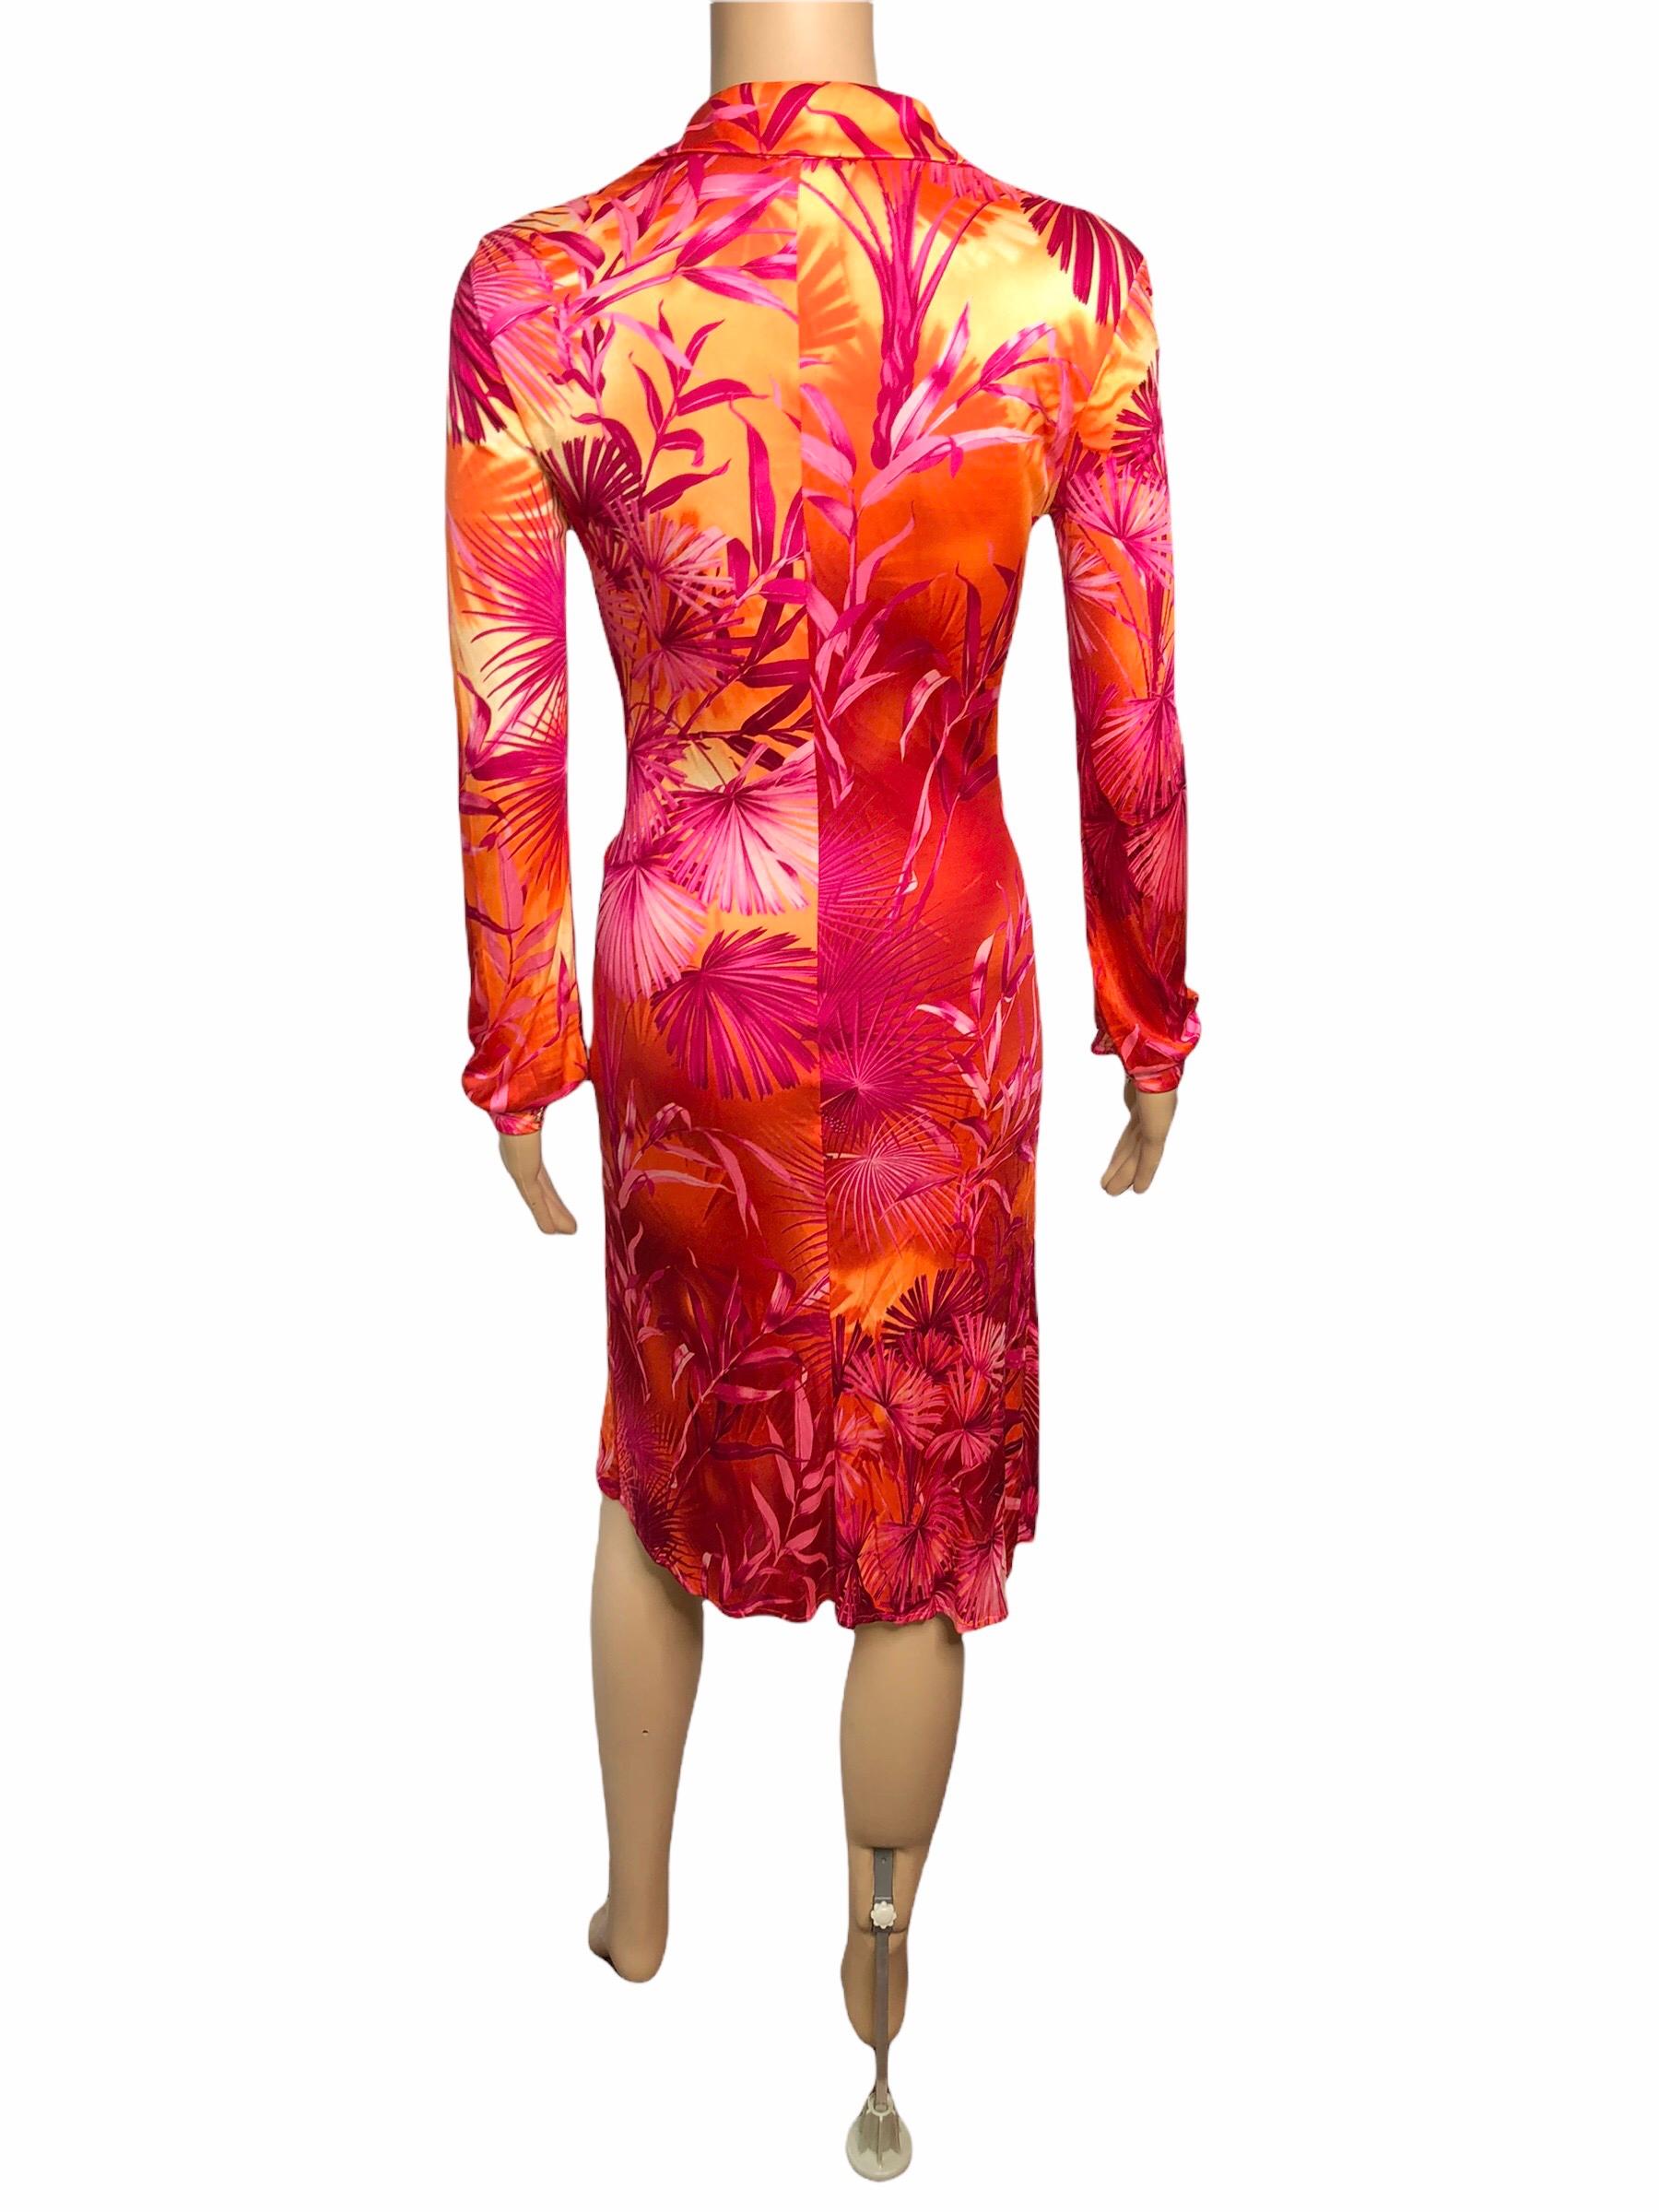 Women's Gianni Versace Runway S/S 2000 Vintage Tropical Print Plunging Neckline Dress For Sale